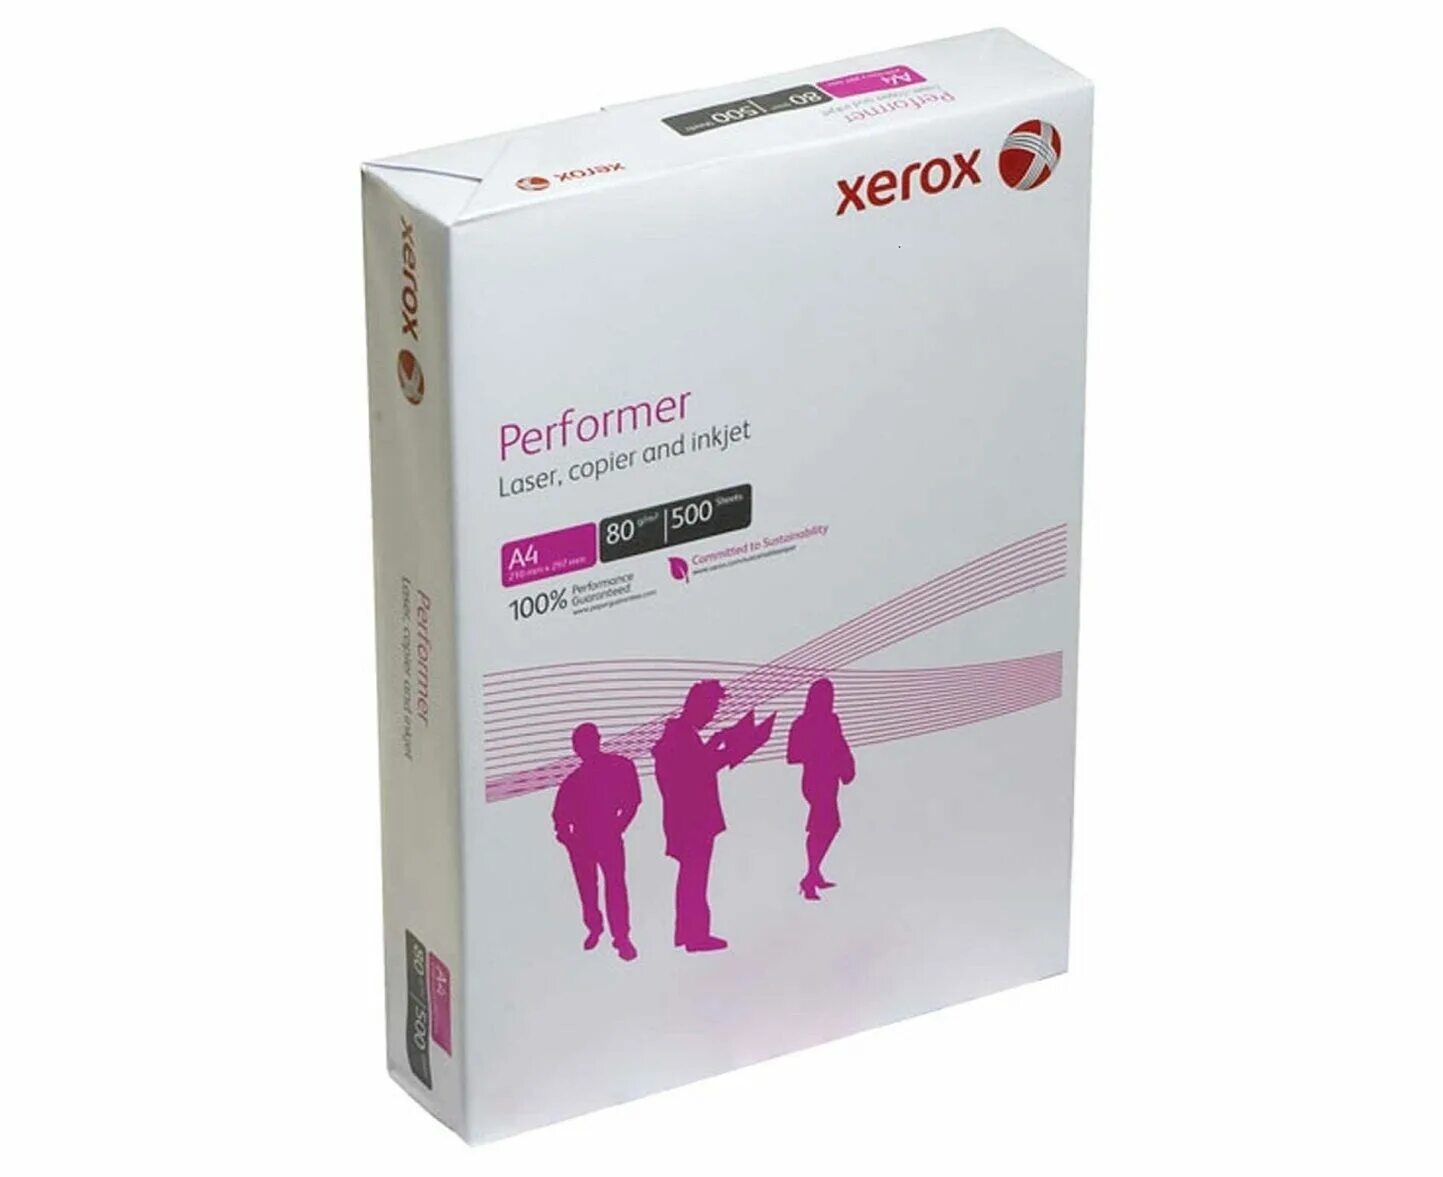 Бумага а4 Xerox performer 500л. Бумага а4 Xerox performer 500л 80 г/м2. Офисная бумага Xerox performer a4 80 г/м2. Бумага Xerox performer a4. Купить бумагу xerox